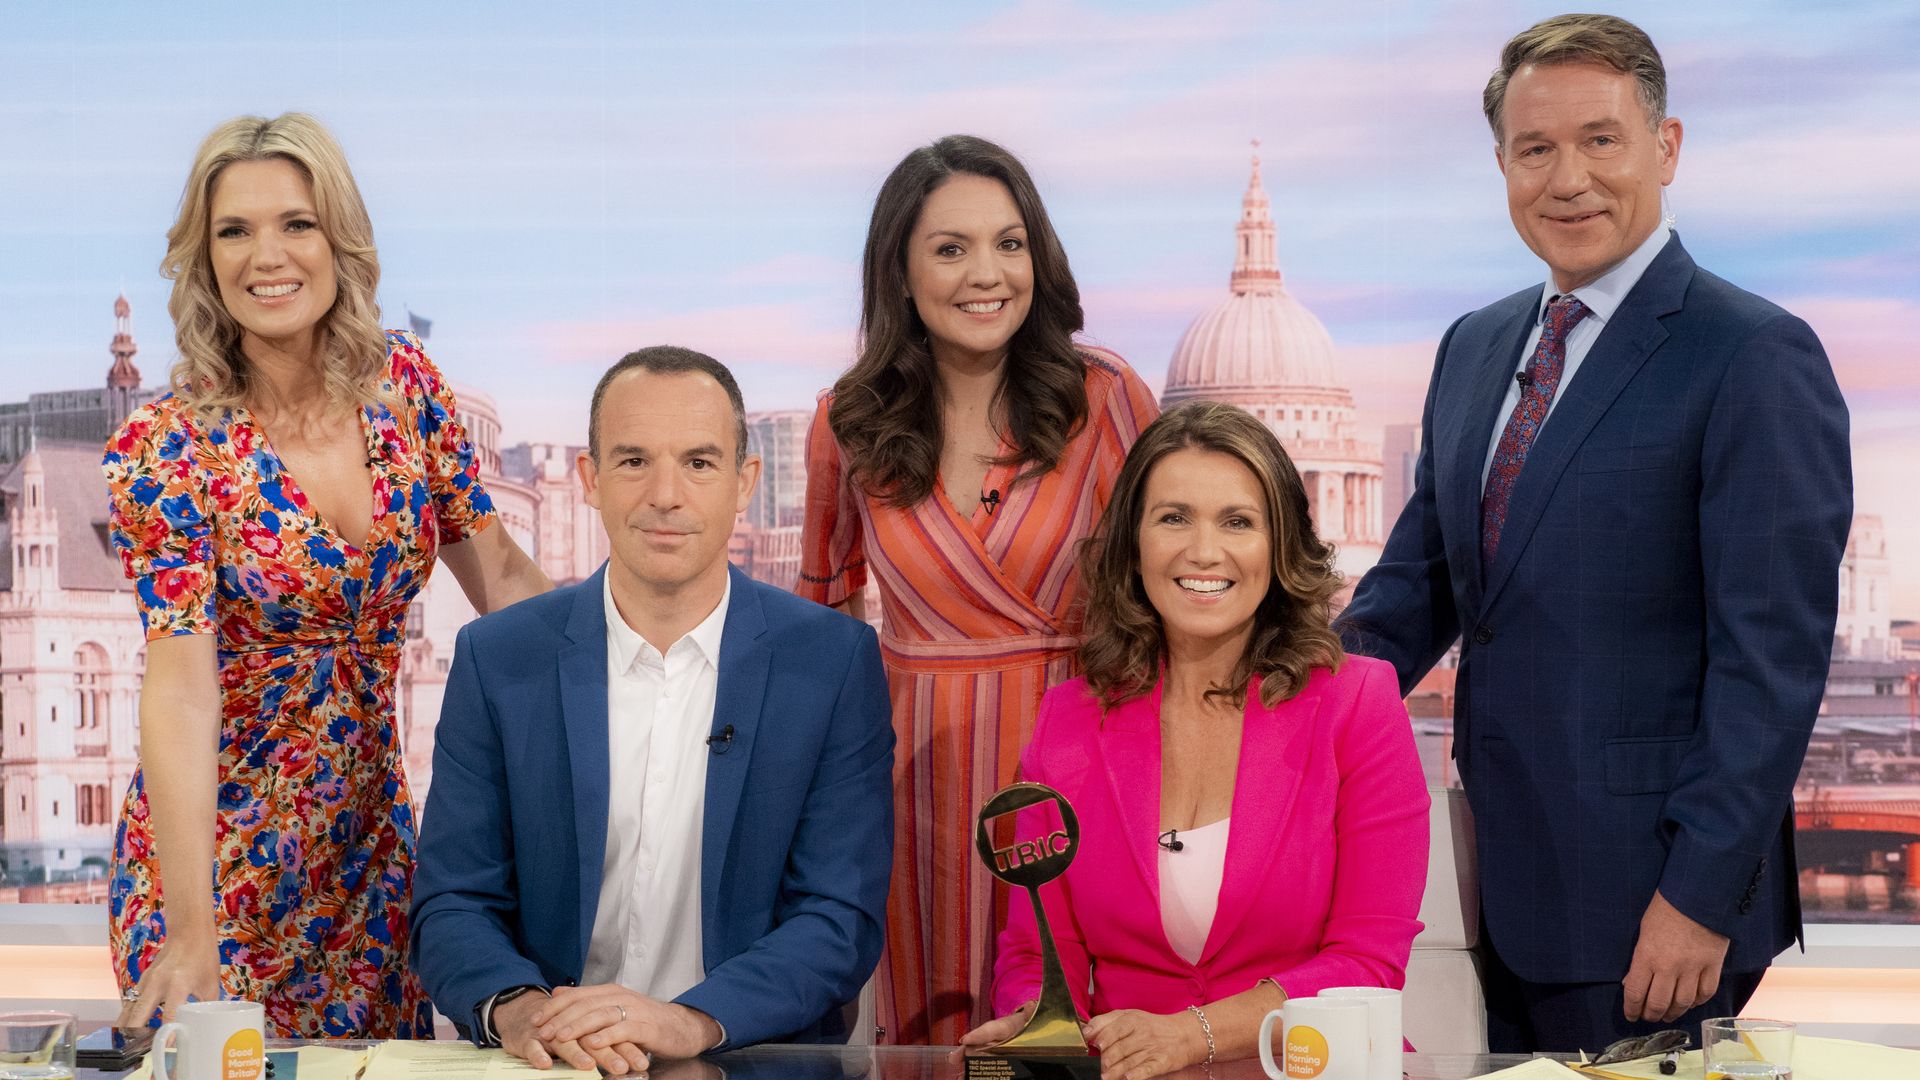 Charlotte Hawkins, Martin Lewis, Laura Tobin, Susanna Reid, Richard Arnold
'Good Morning Britain' TV show, London, UK - 28 Jun 2023